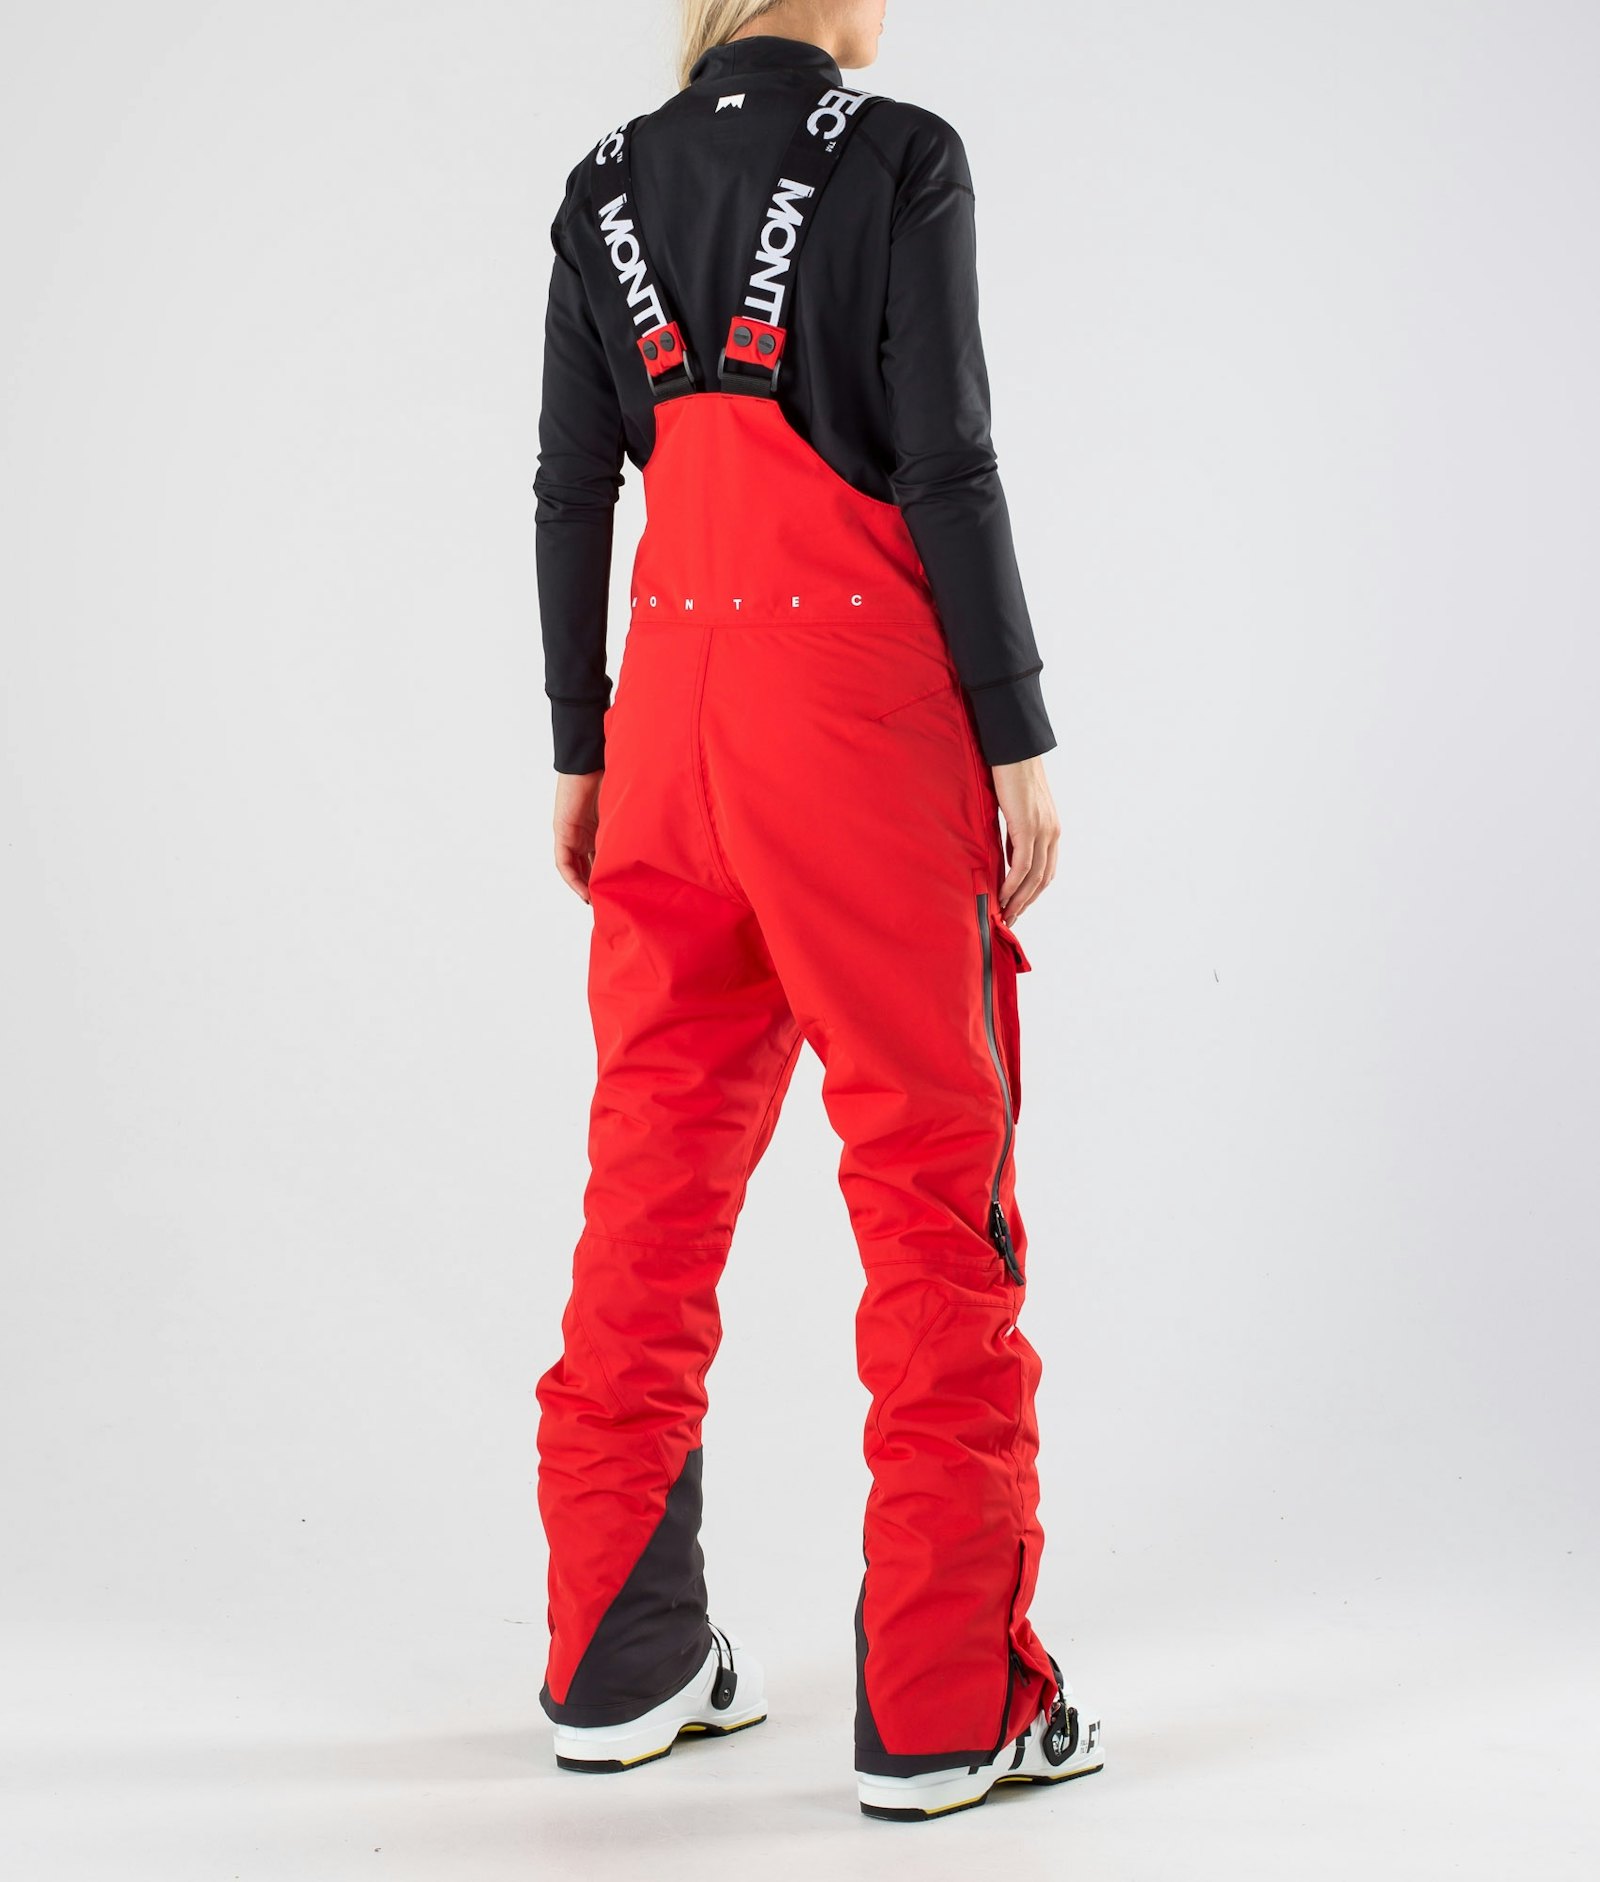 Fawk W 2019 Pantalones Esquí Mujer Red